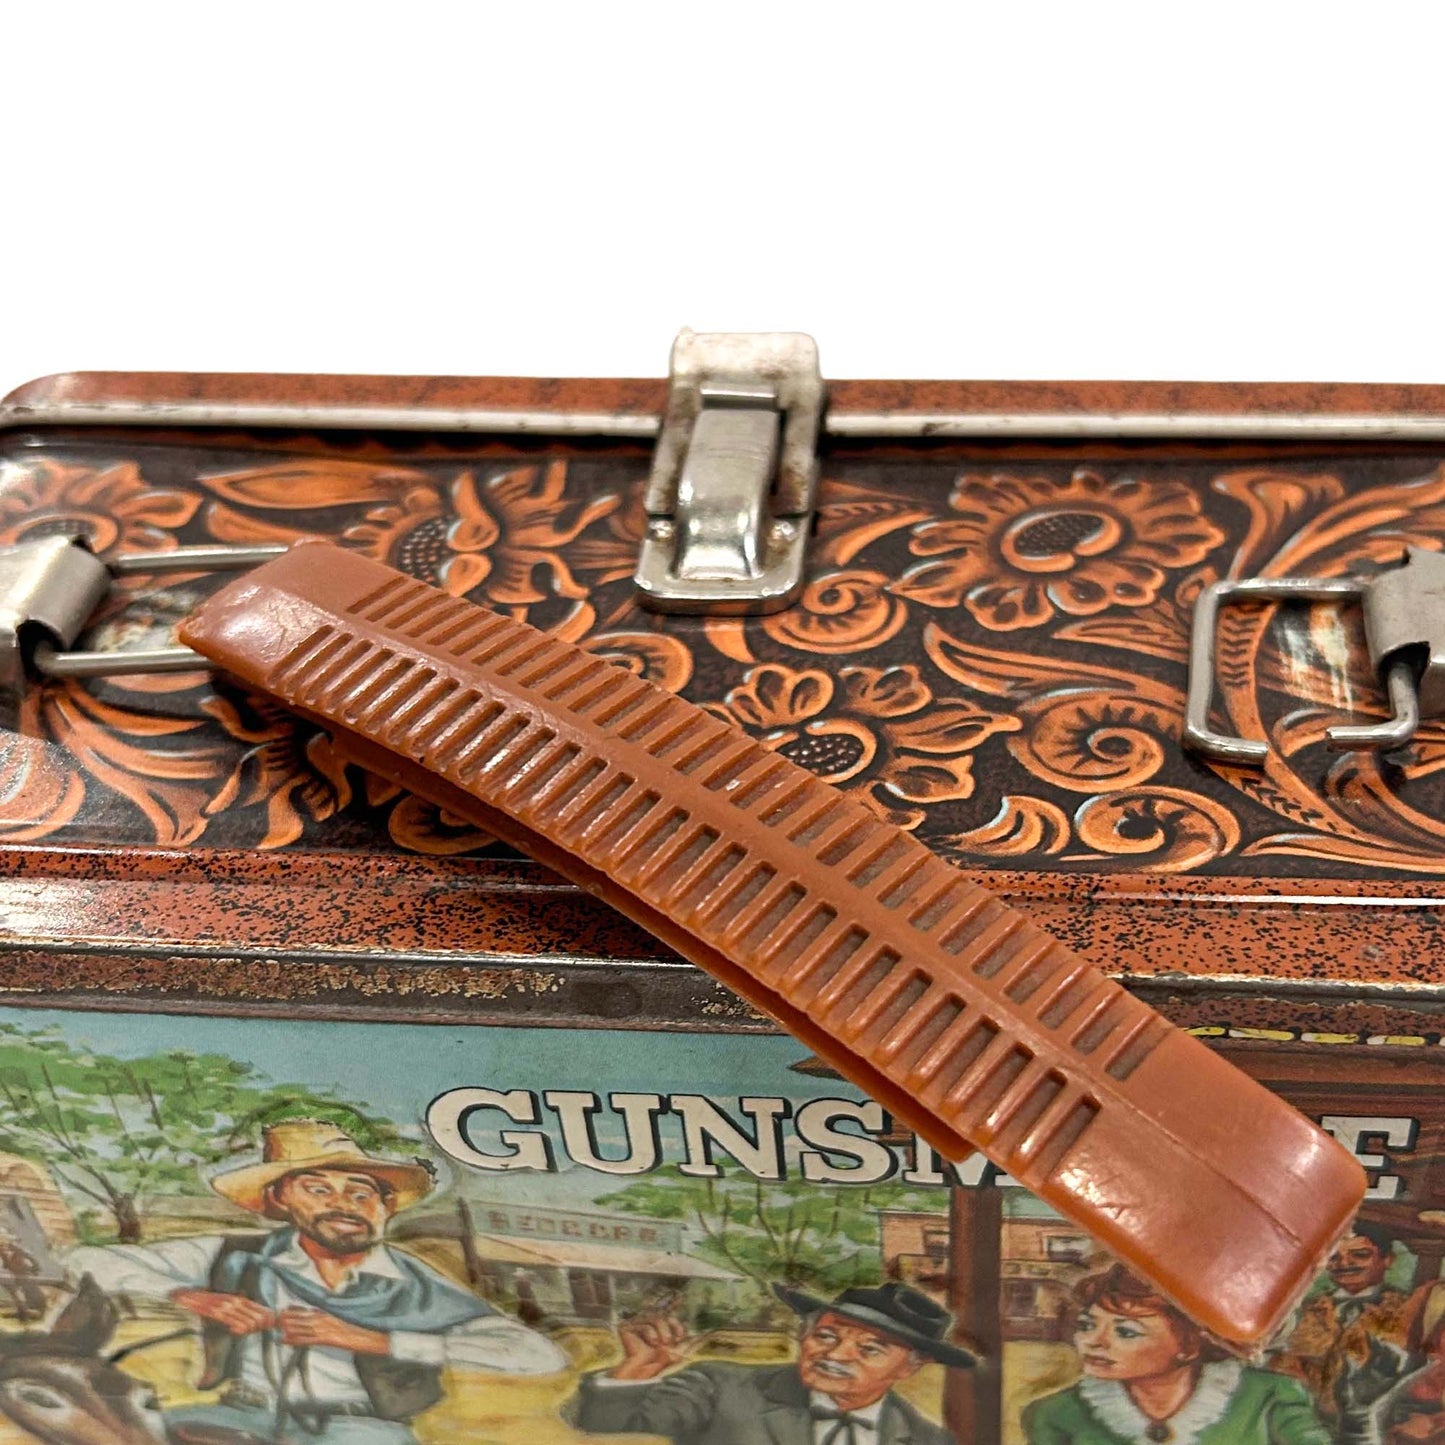 1972 Gunsmoke Lunchbox Flaw